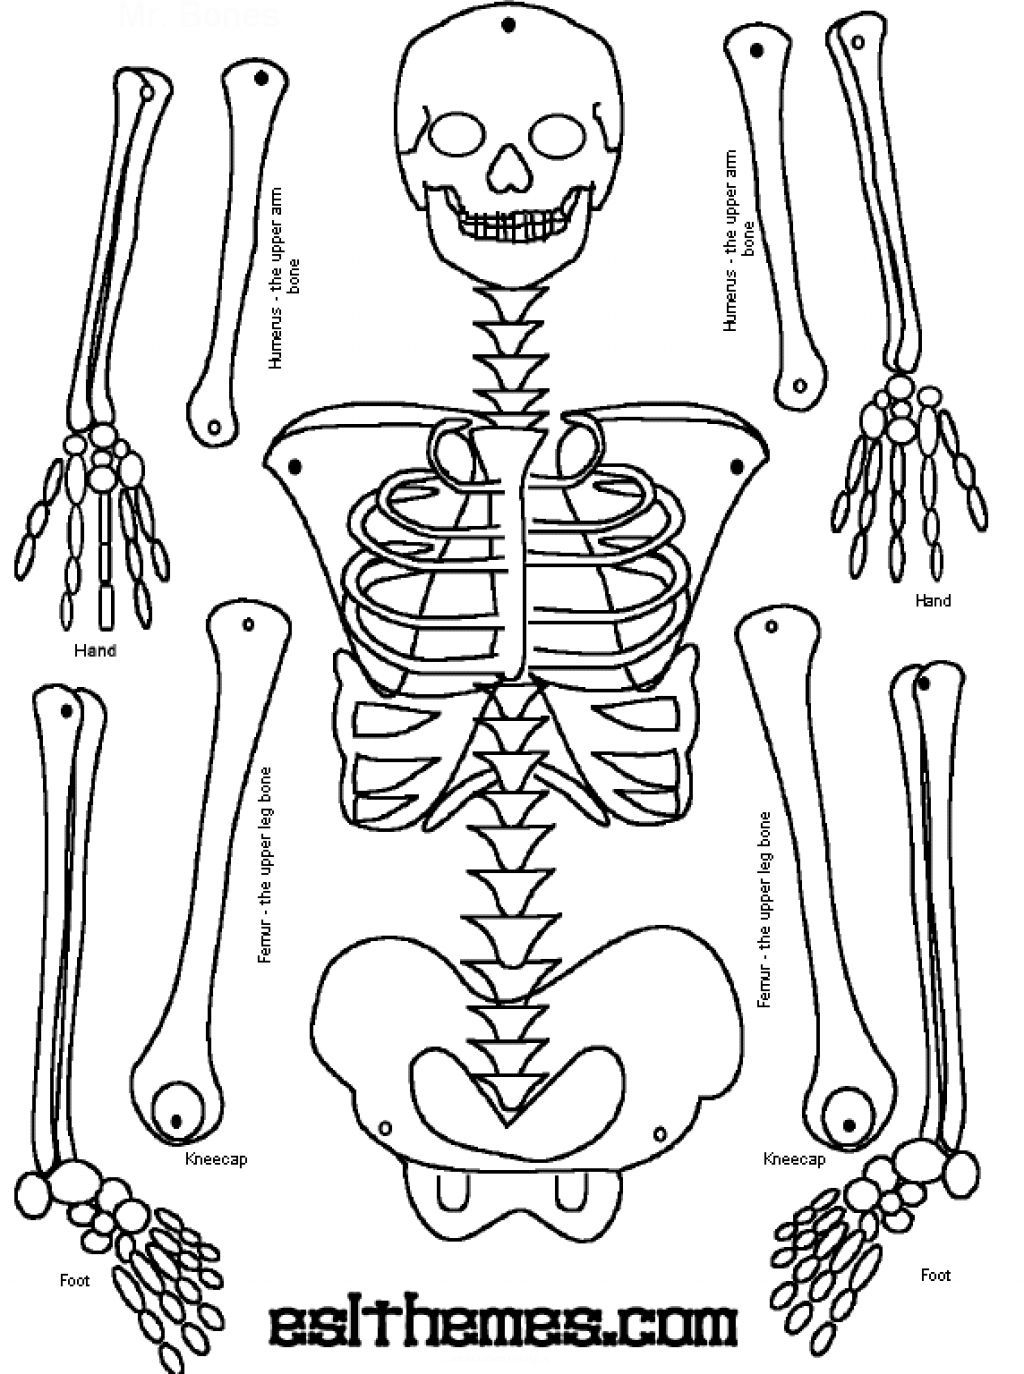 Skeleton Puzzle Printable | Print It | Human Skeleton, Human Body - Printable Skeleton Puzzle